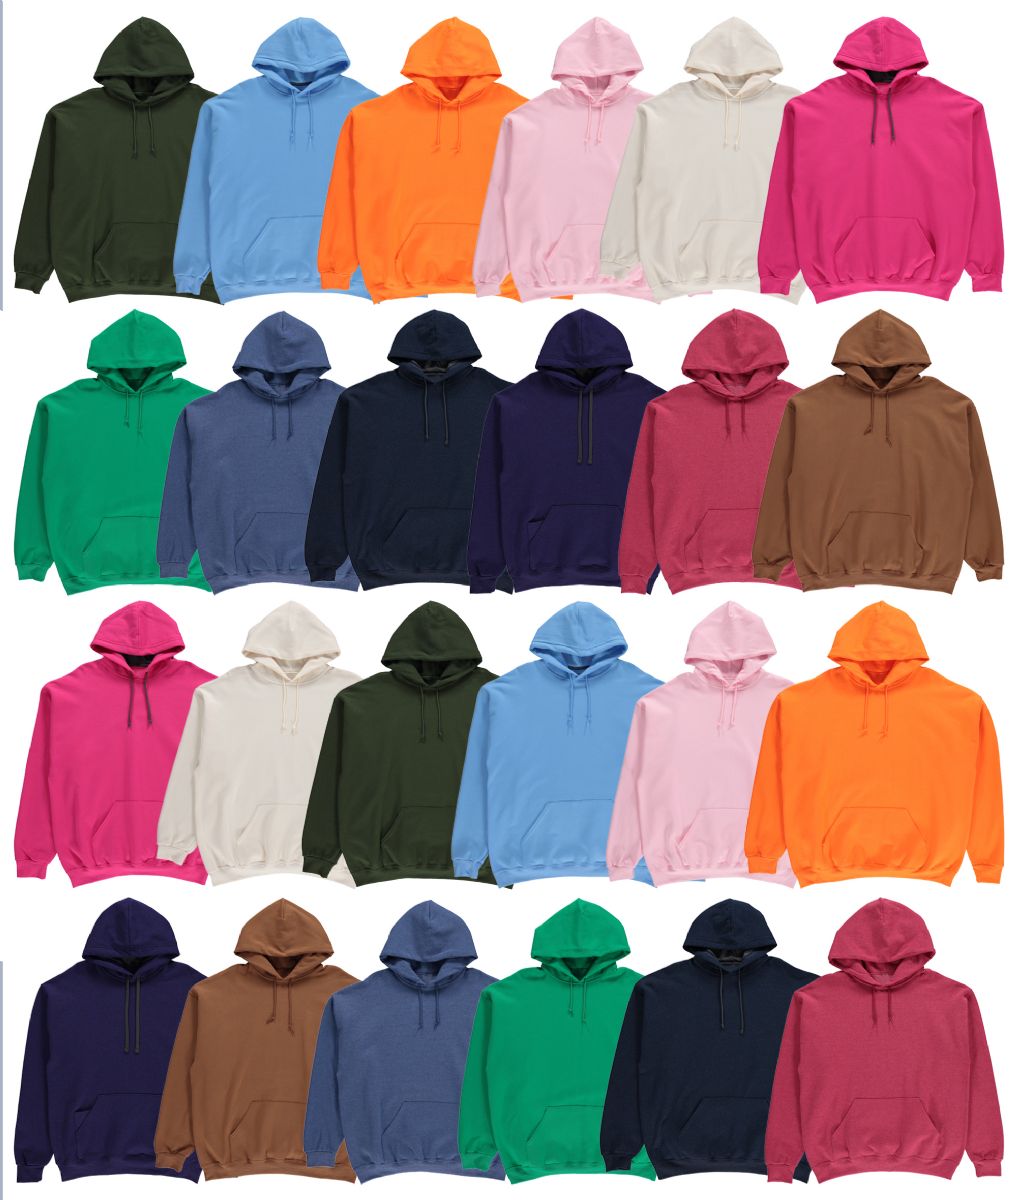 24 Wholesale Billionhats Mens Wholesale Hoodie Sweatshirts, Size Small